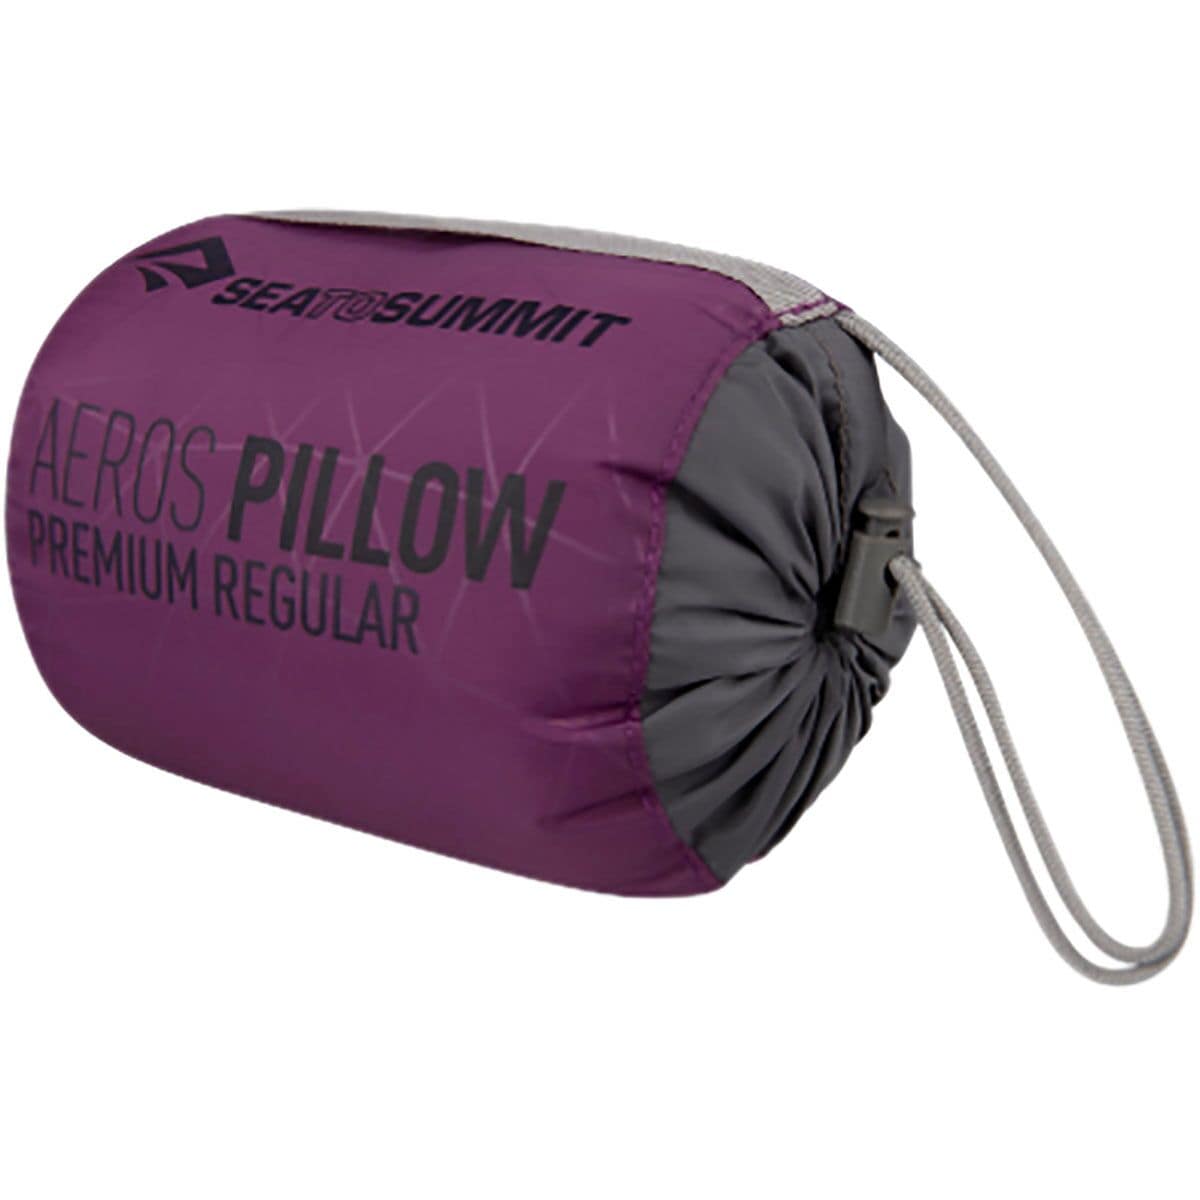  Sea To Summit Aeros Premium Pillow - Hike & Camp